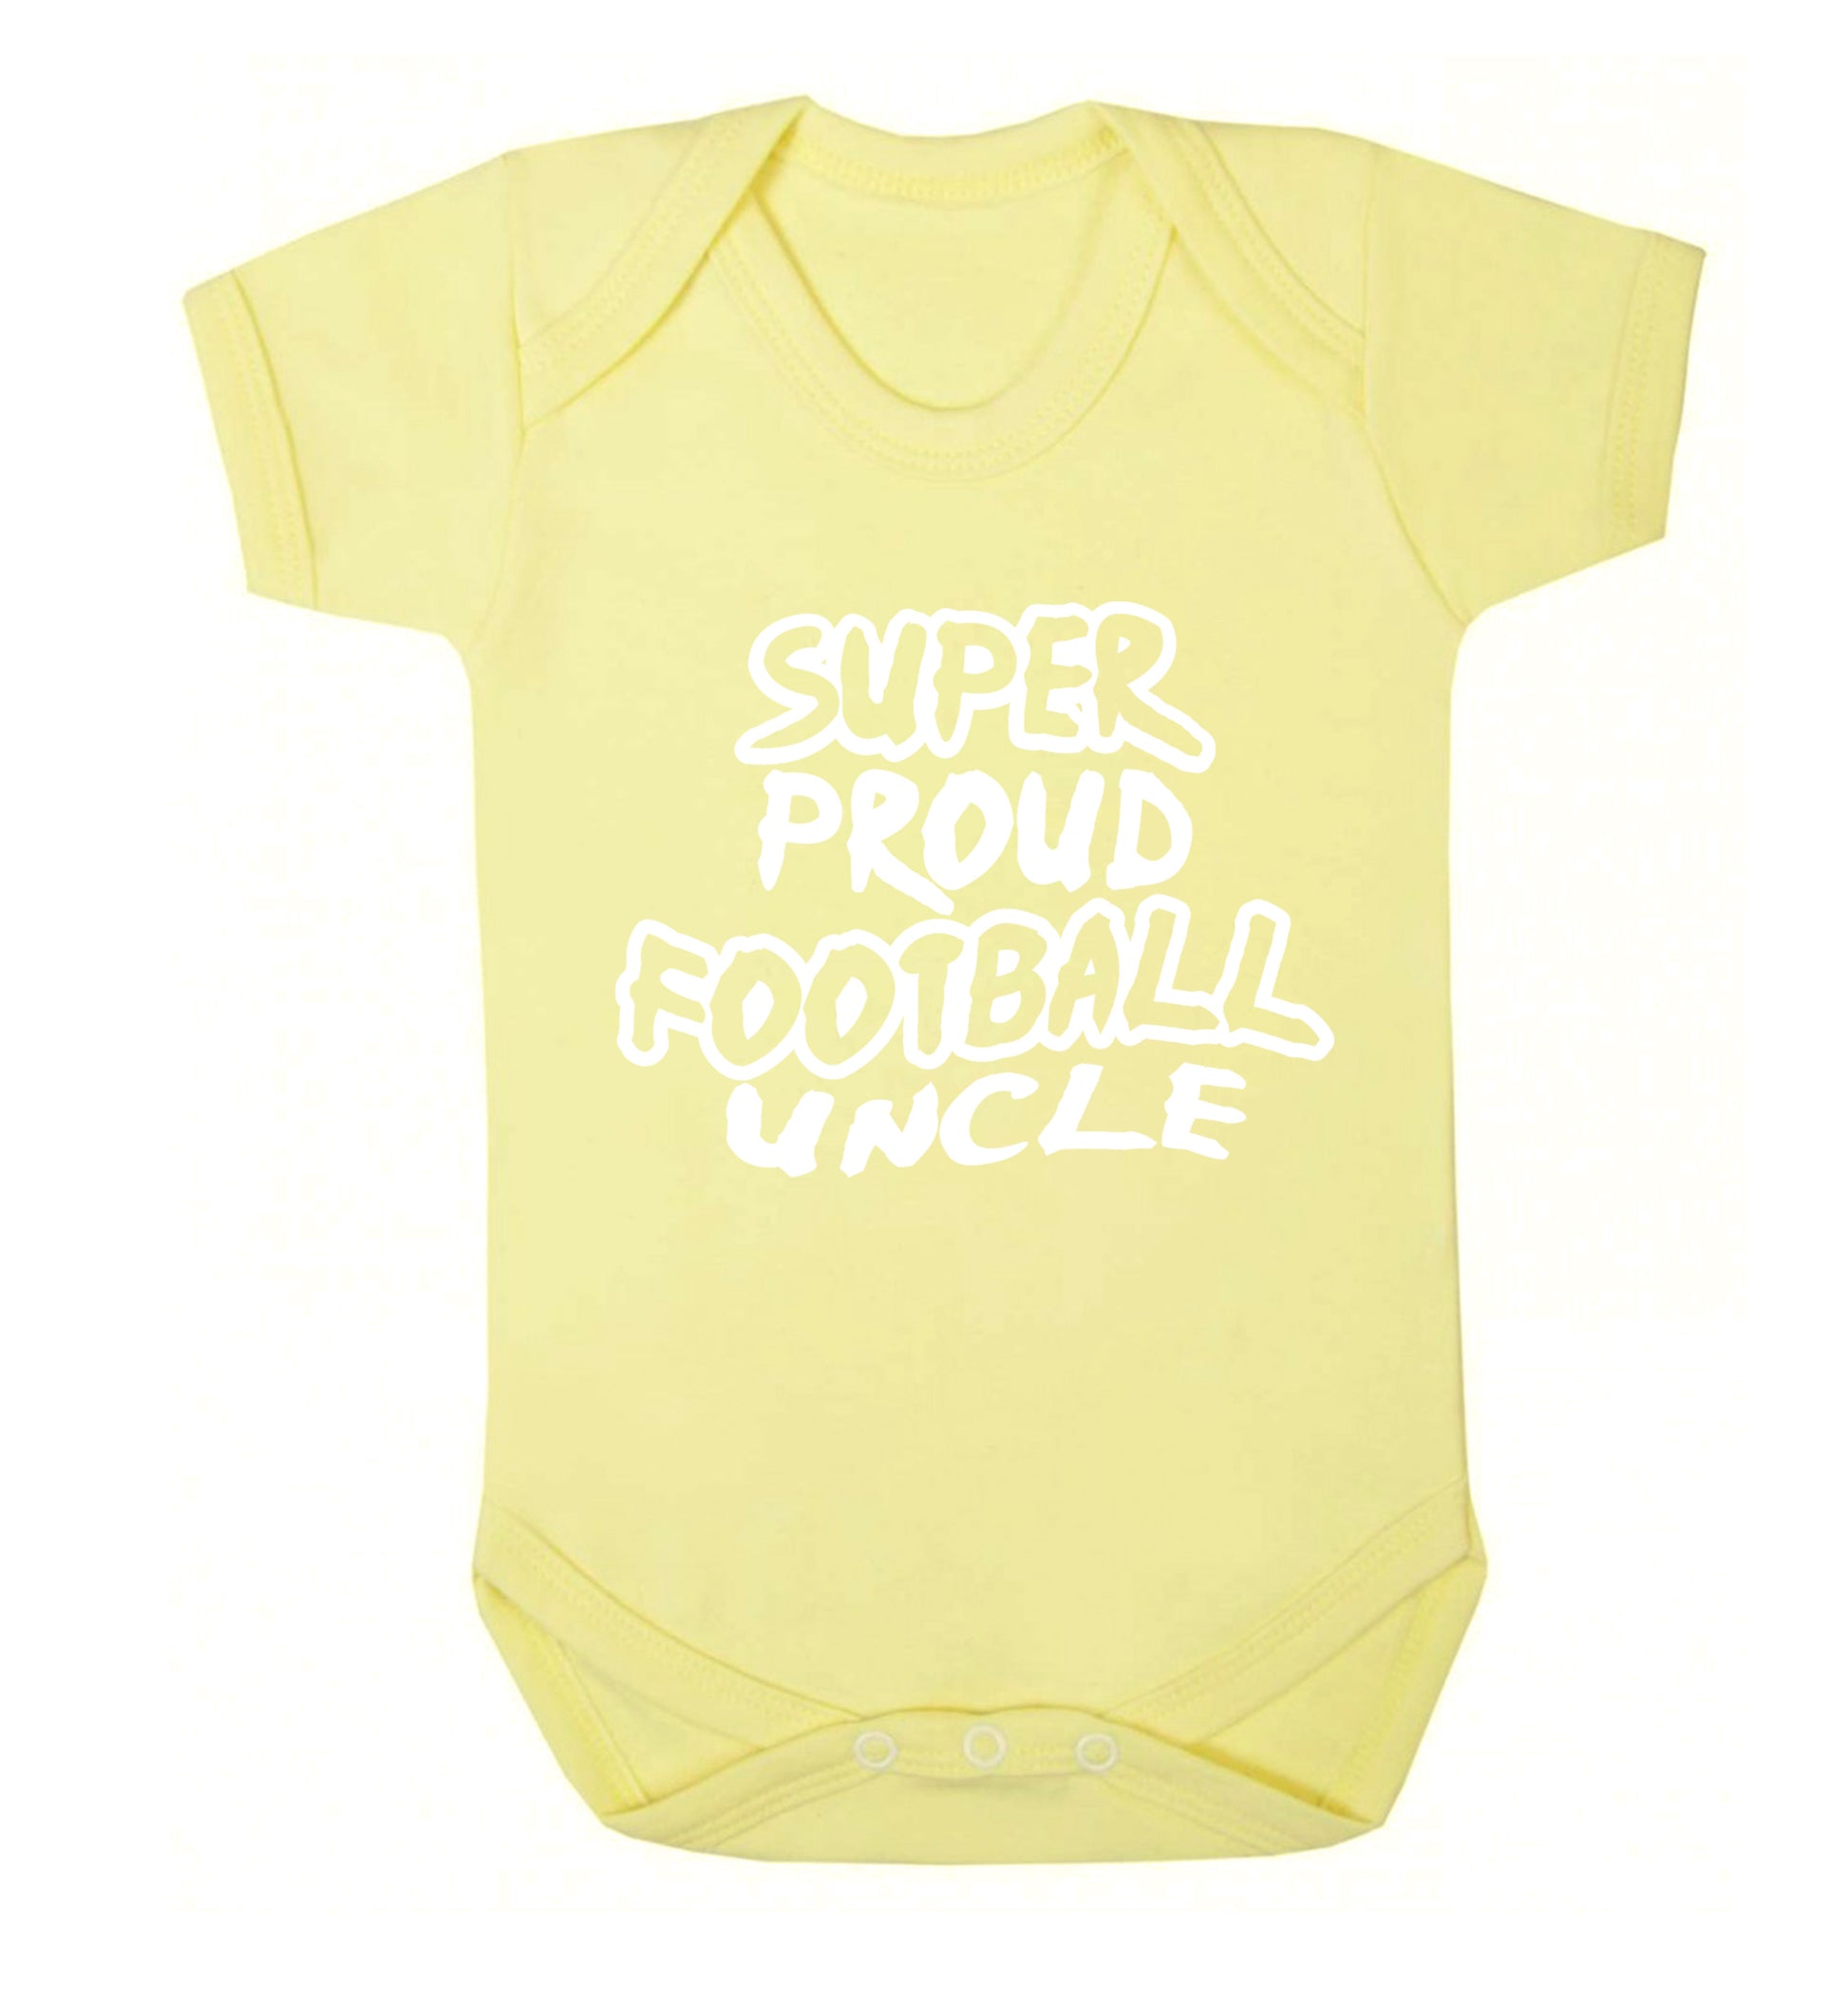 Super proud football uncle Baby Vest pale yellow 18-24 months